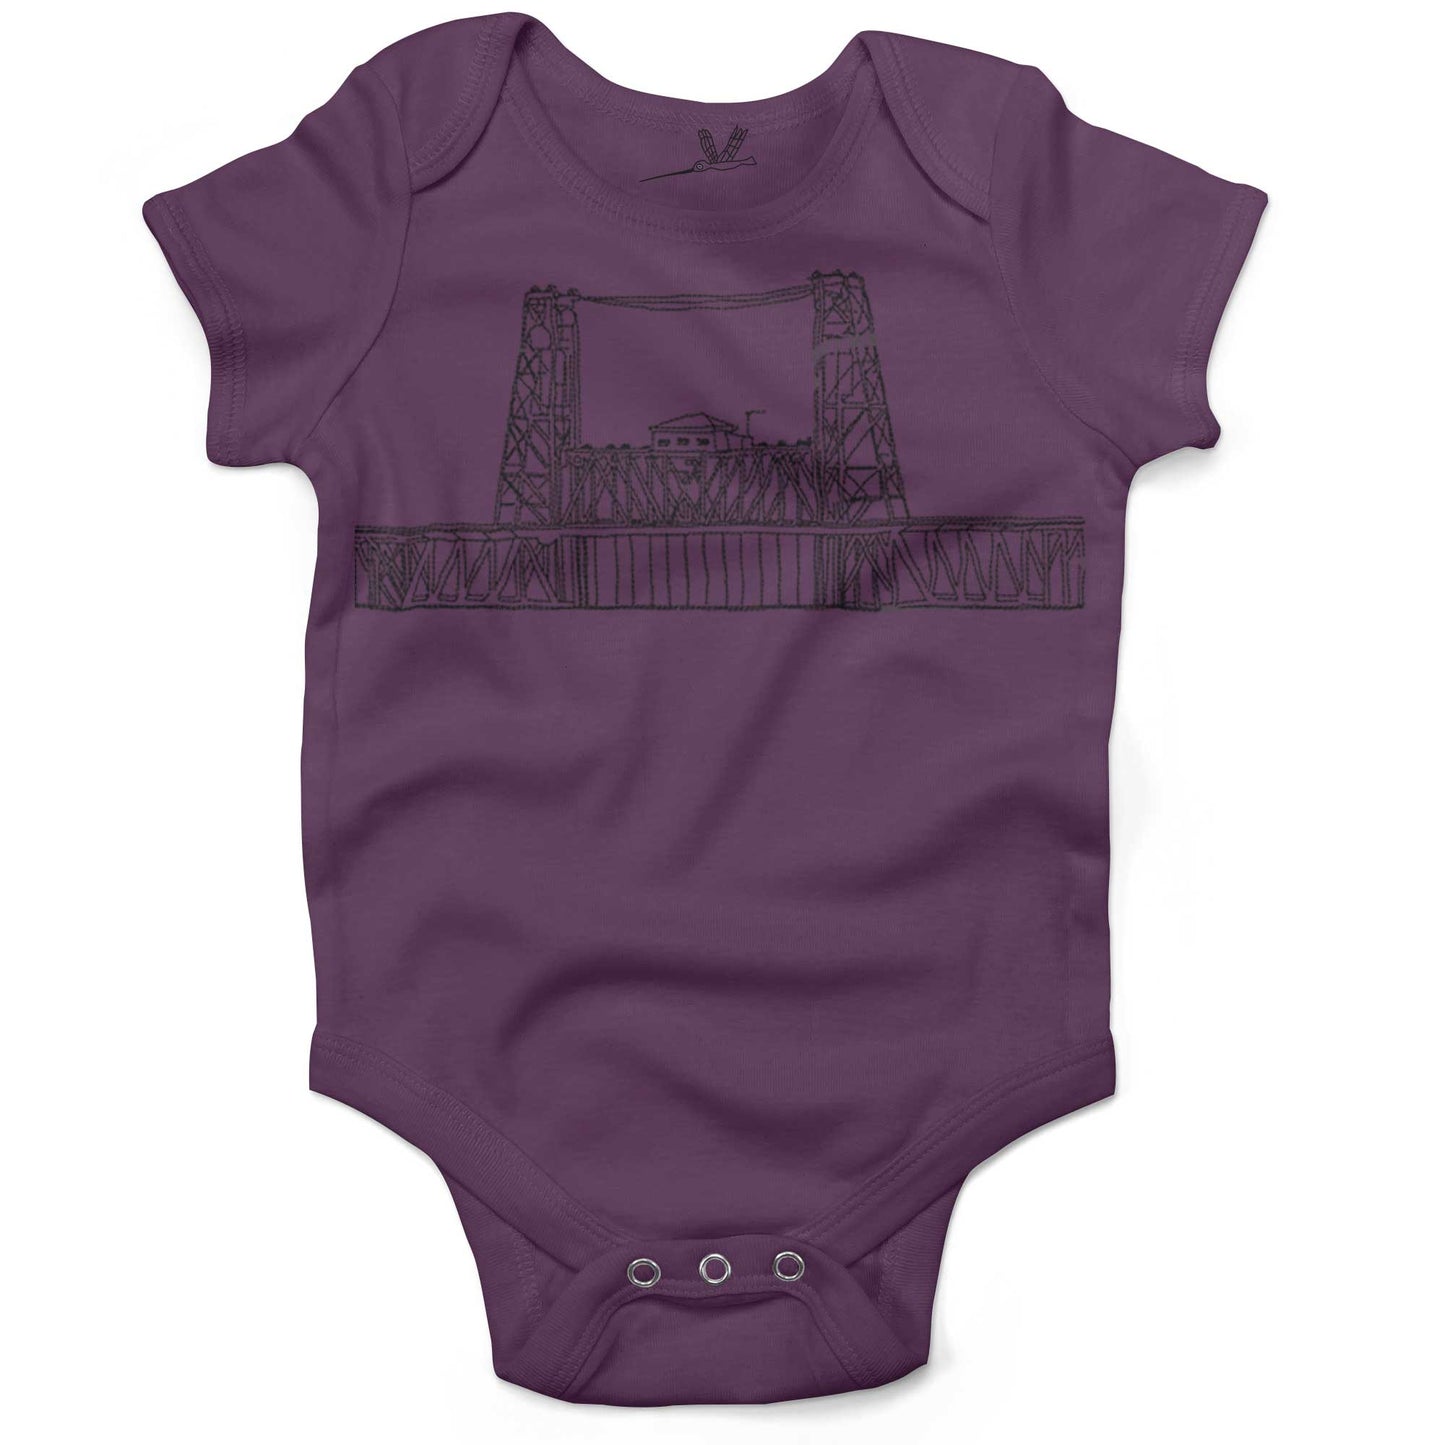 Steel Bridge Infant Bodysuit or Raglan Baby Tee-Organic Purple-3-6 months